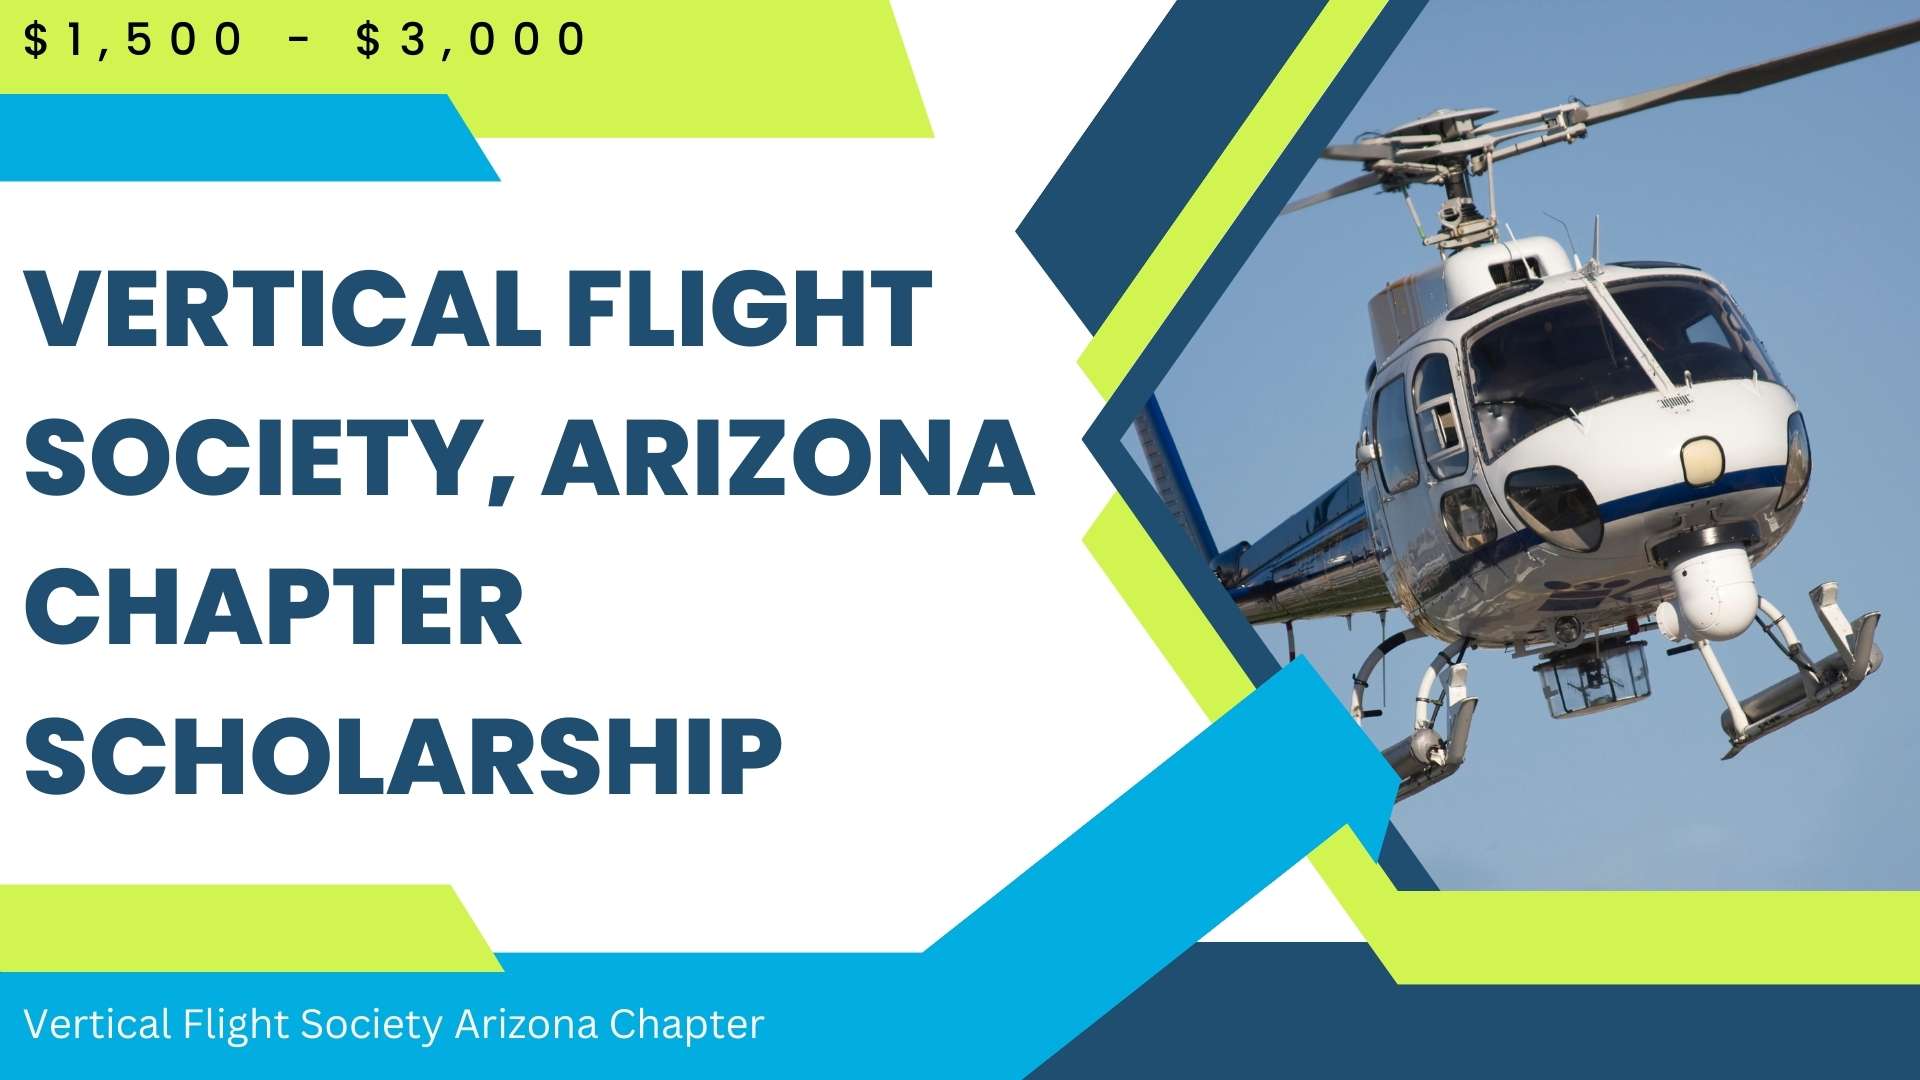 Vertical Flight Society ‚Äì Arizona Chapter Scholarship